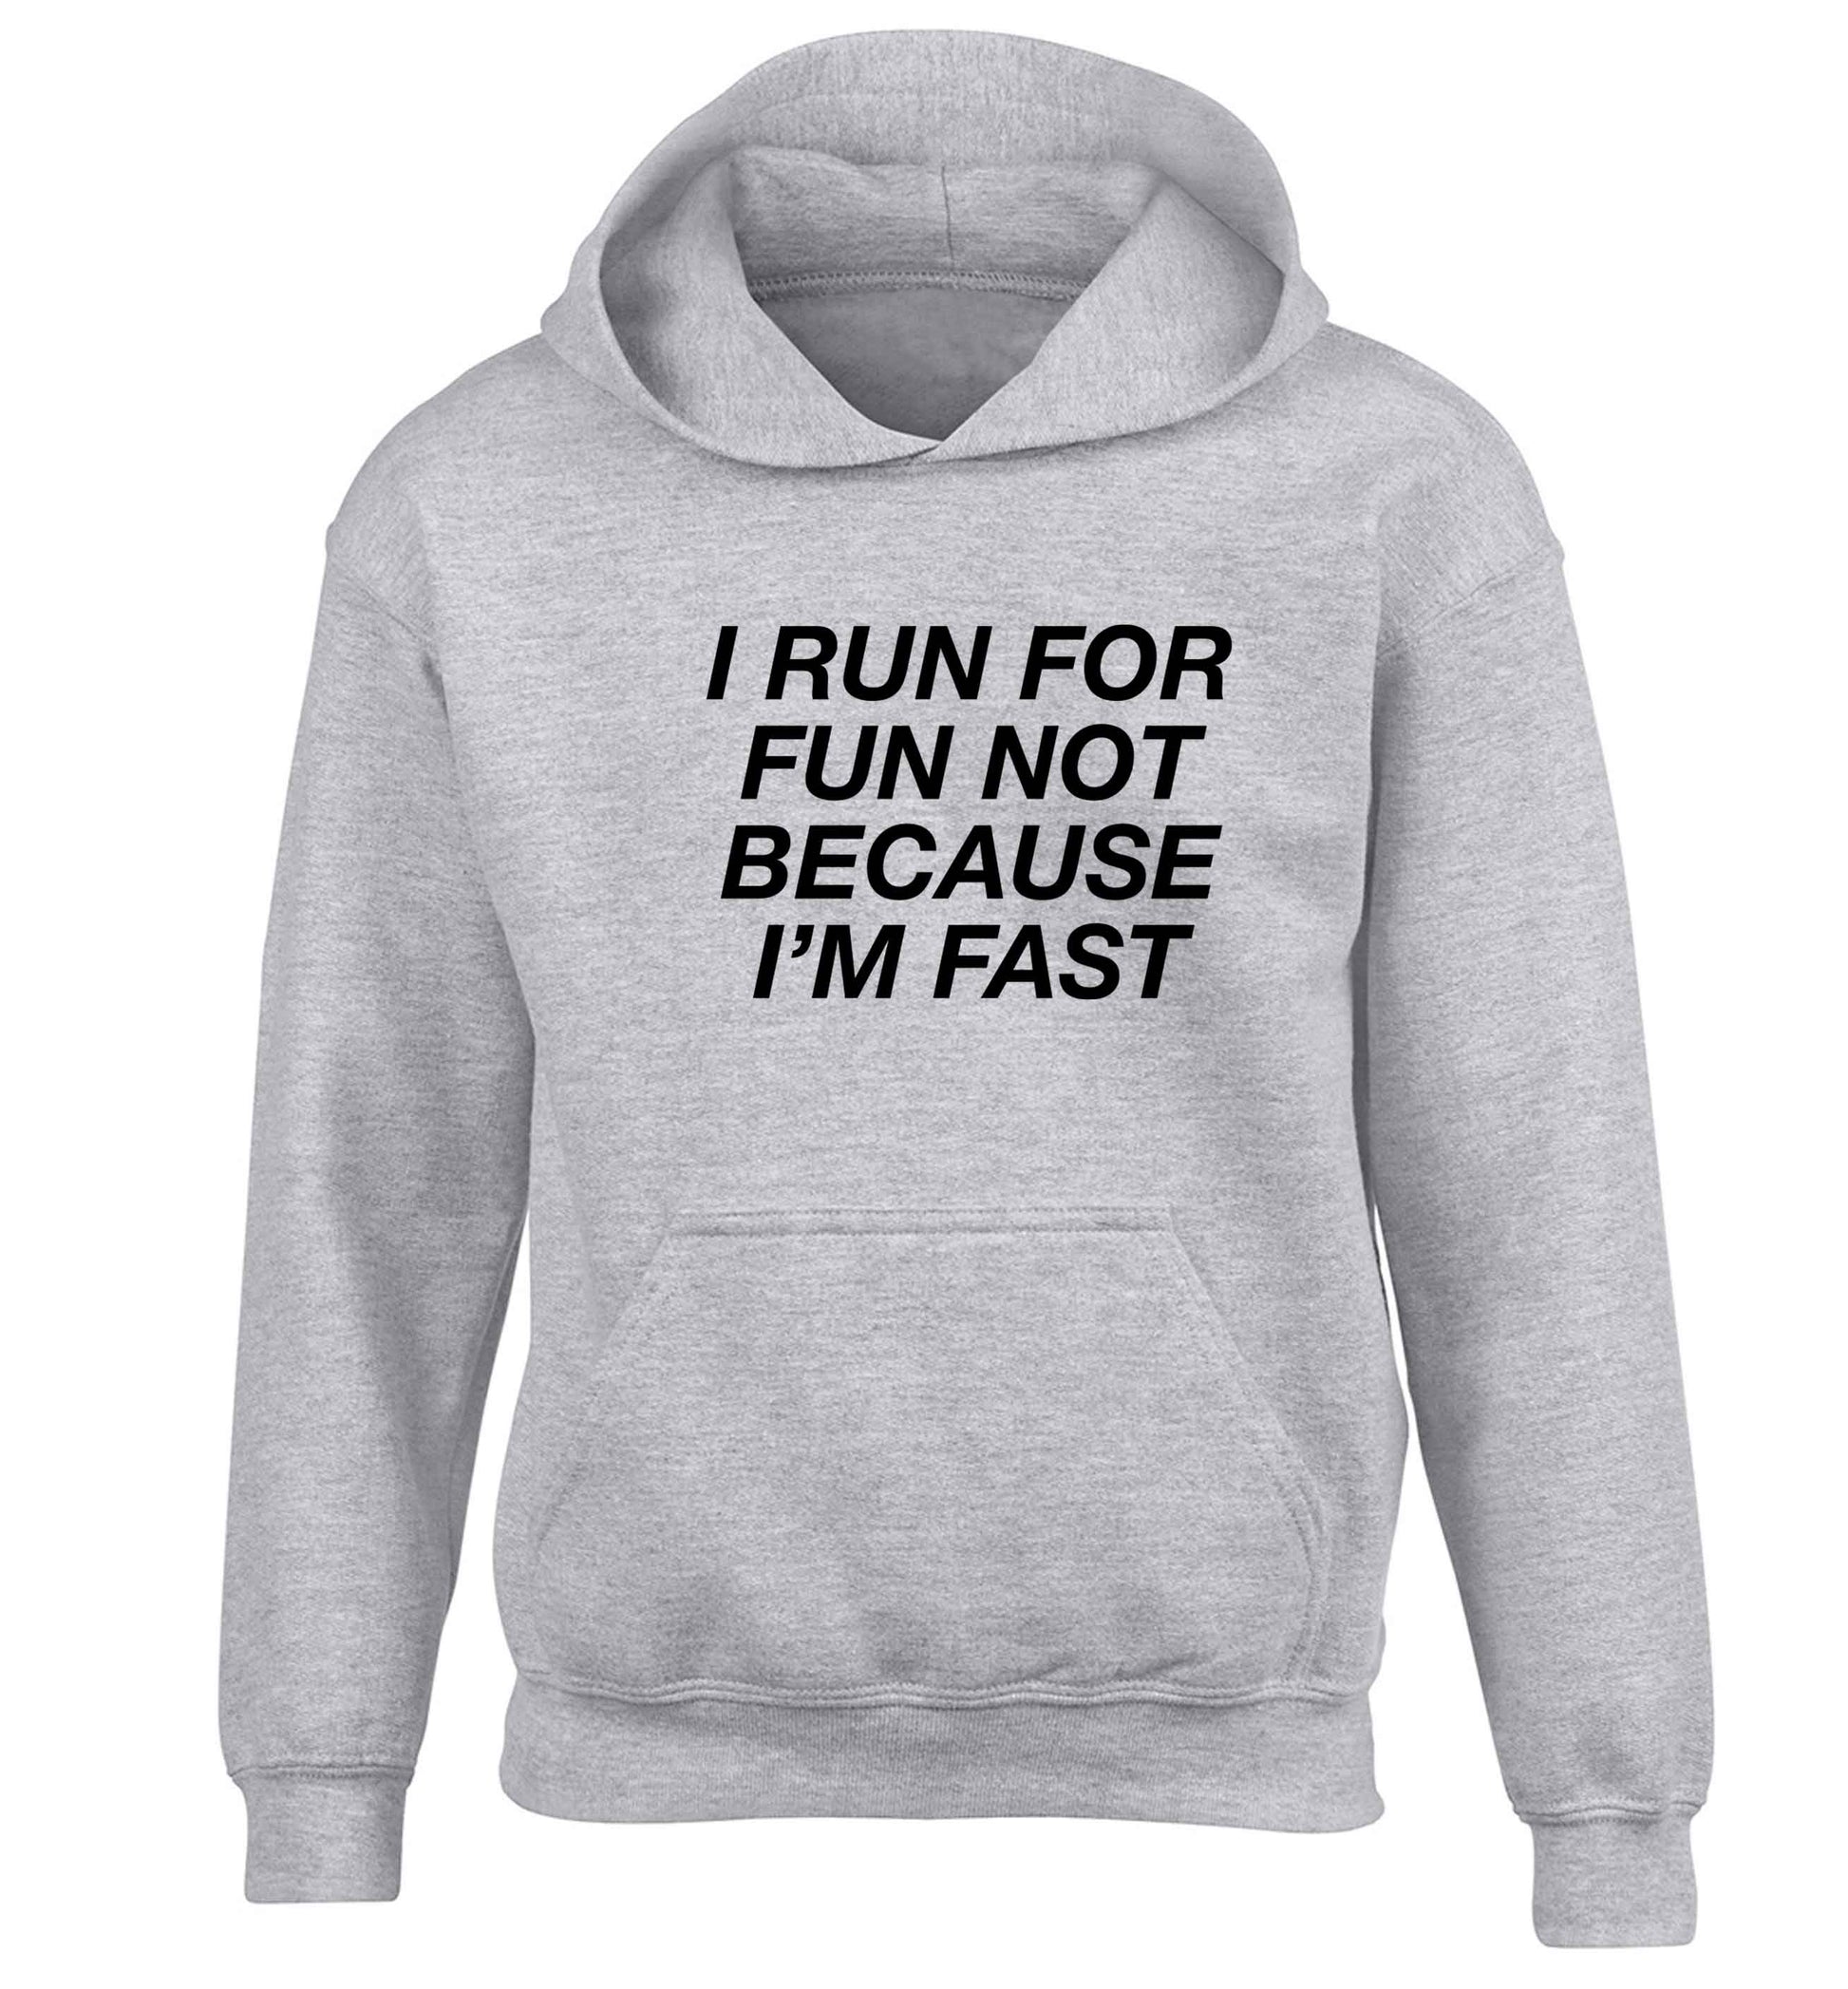 I run for fun not because I'm fast children's grey hoodie 12-13 Years